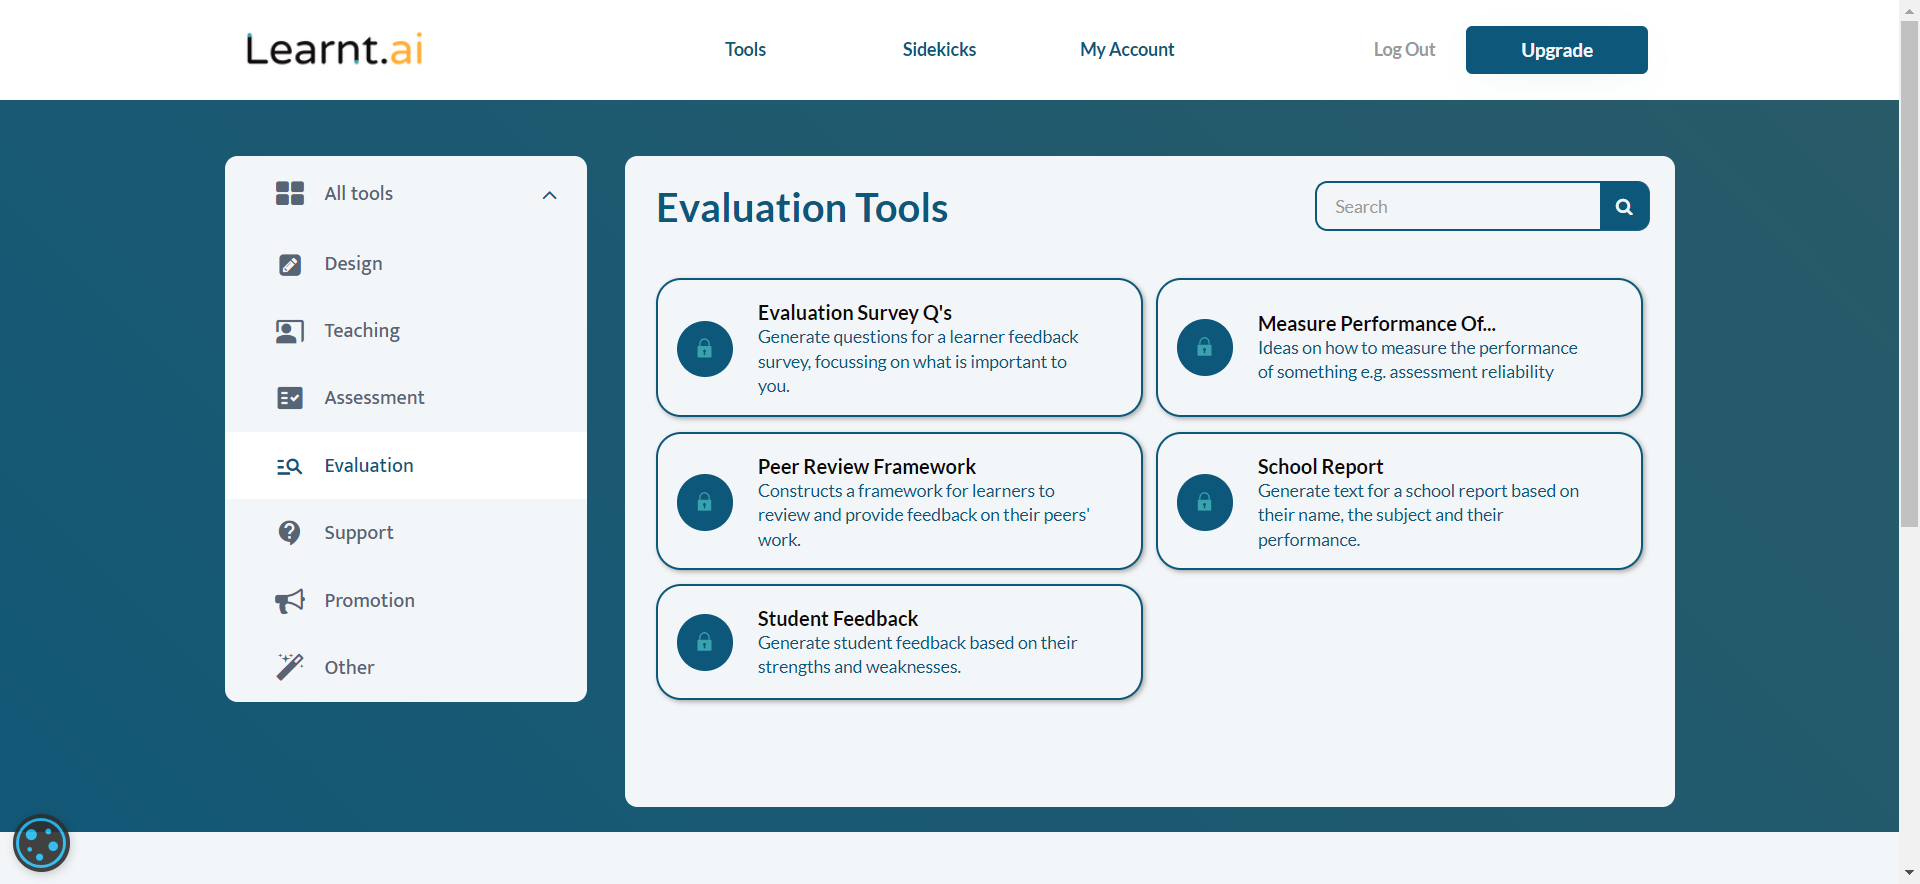 Evaluation tools